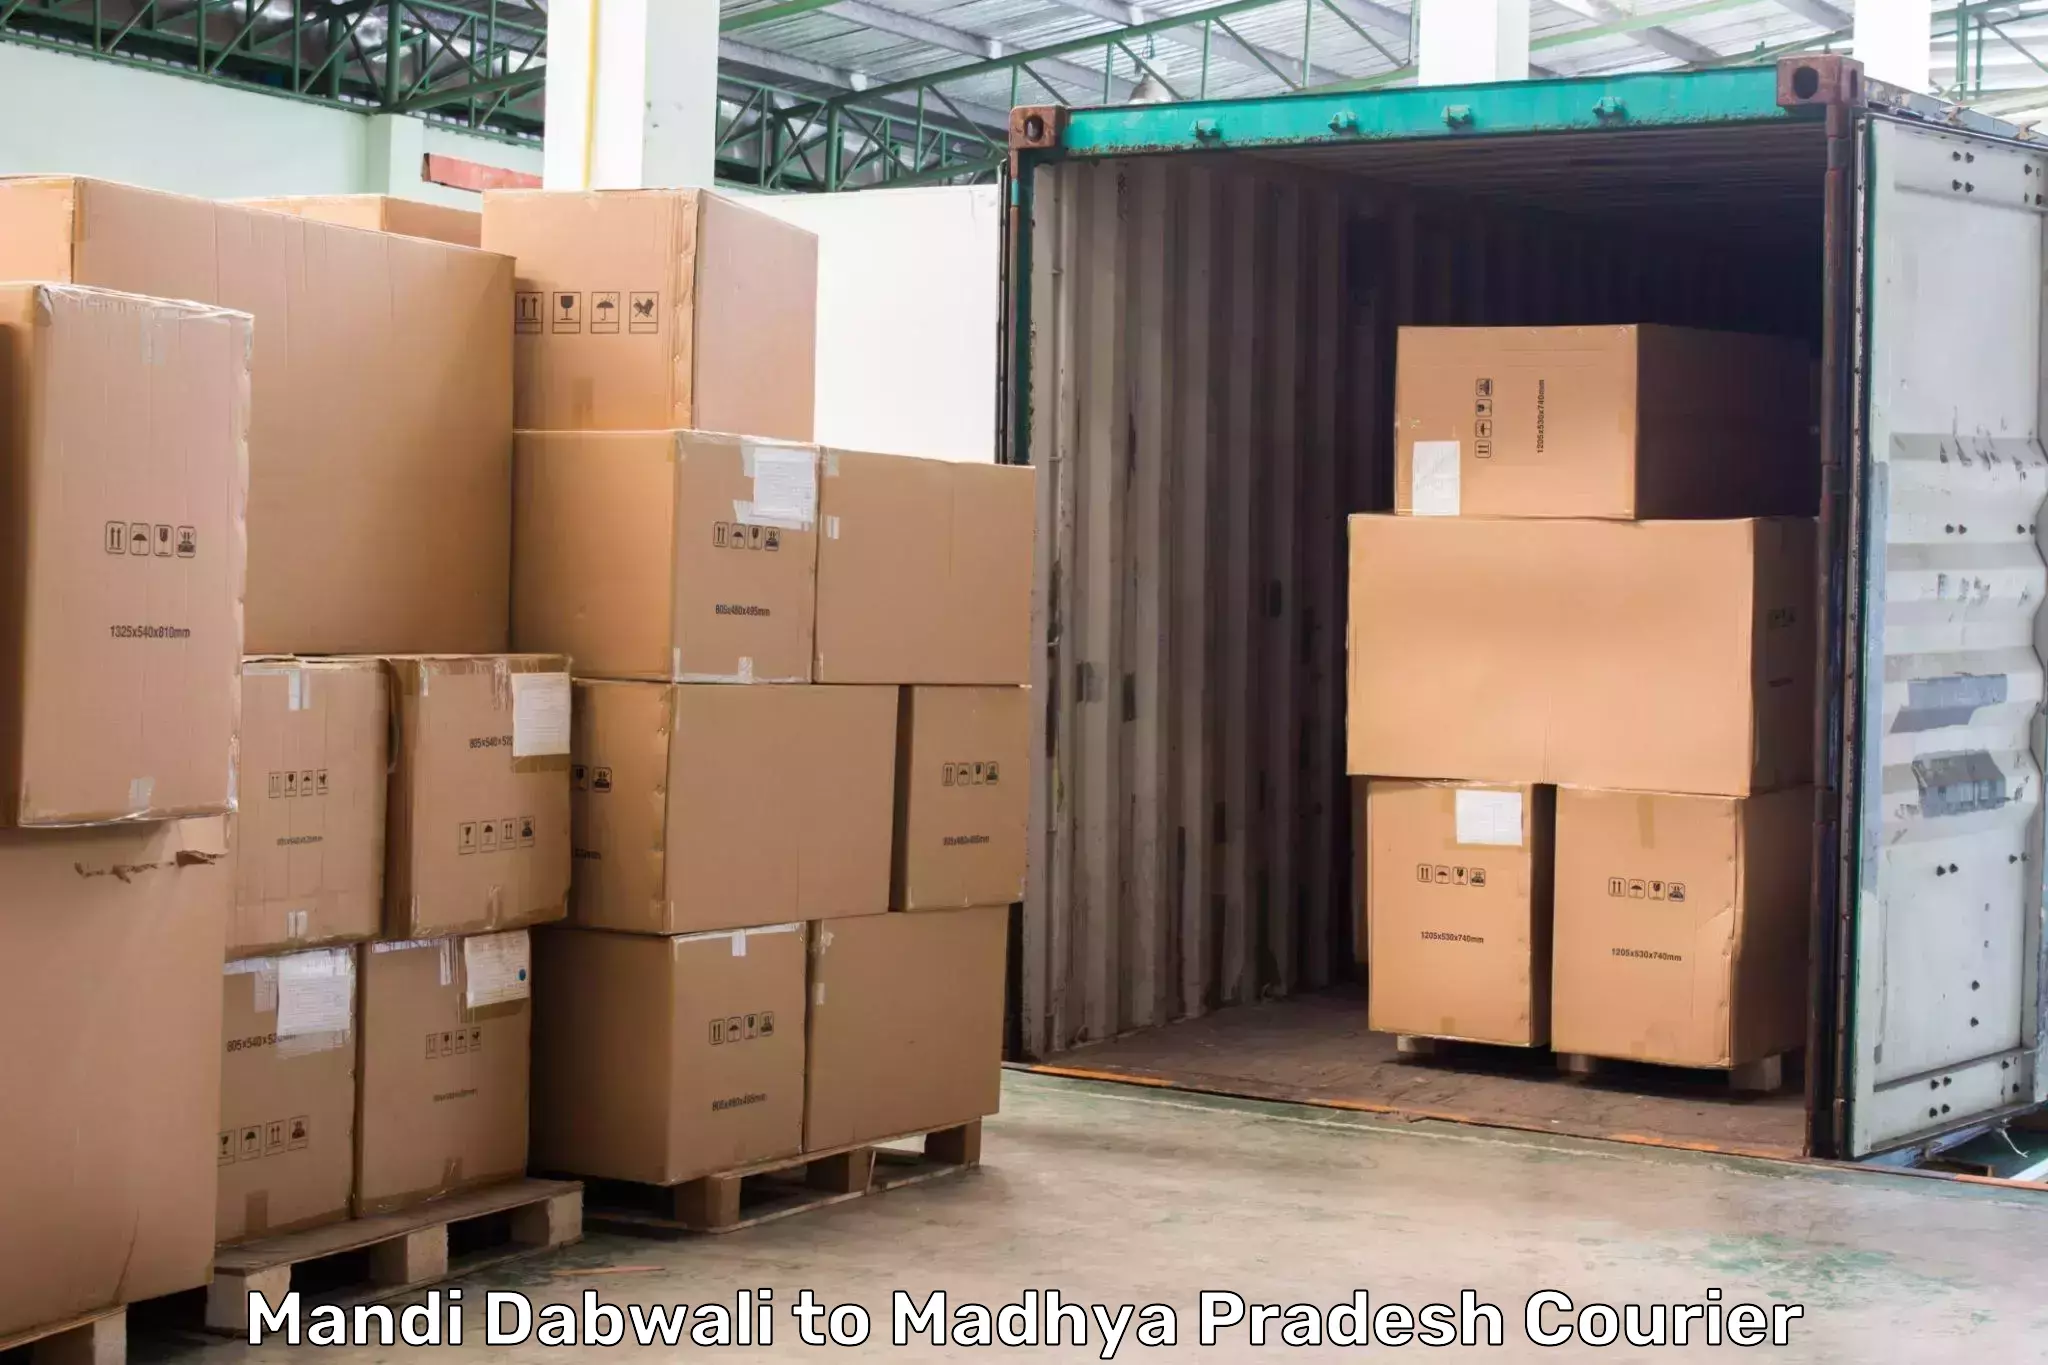 Global shipping networks in Mandi Dabwali to Rampur Naikin